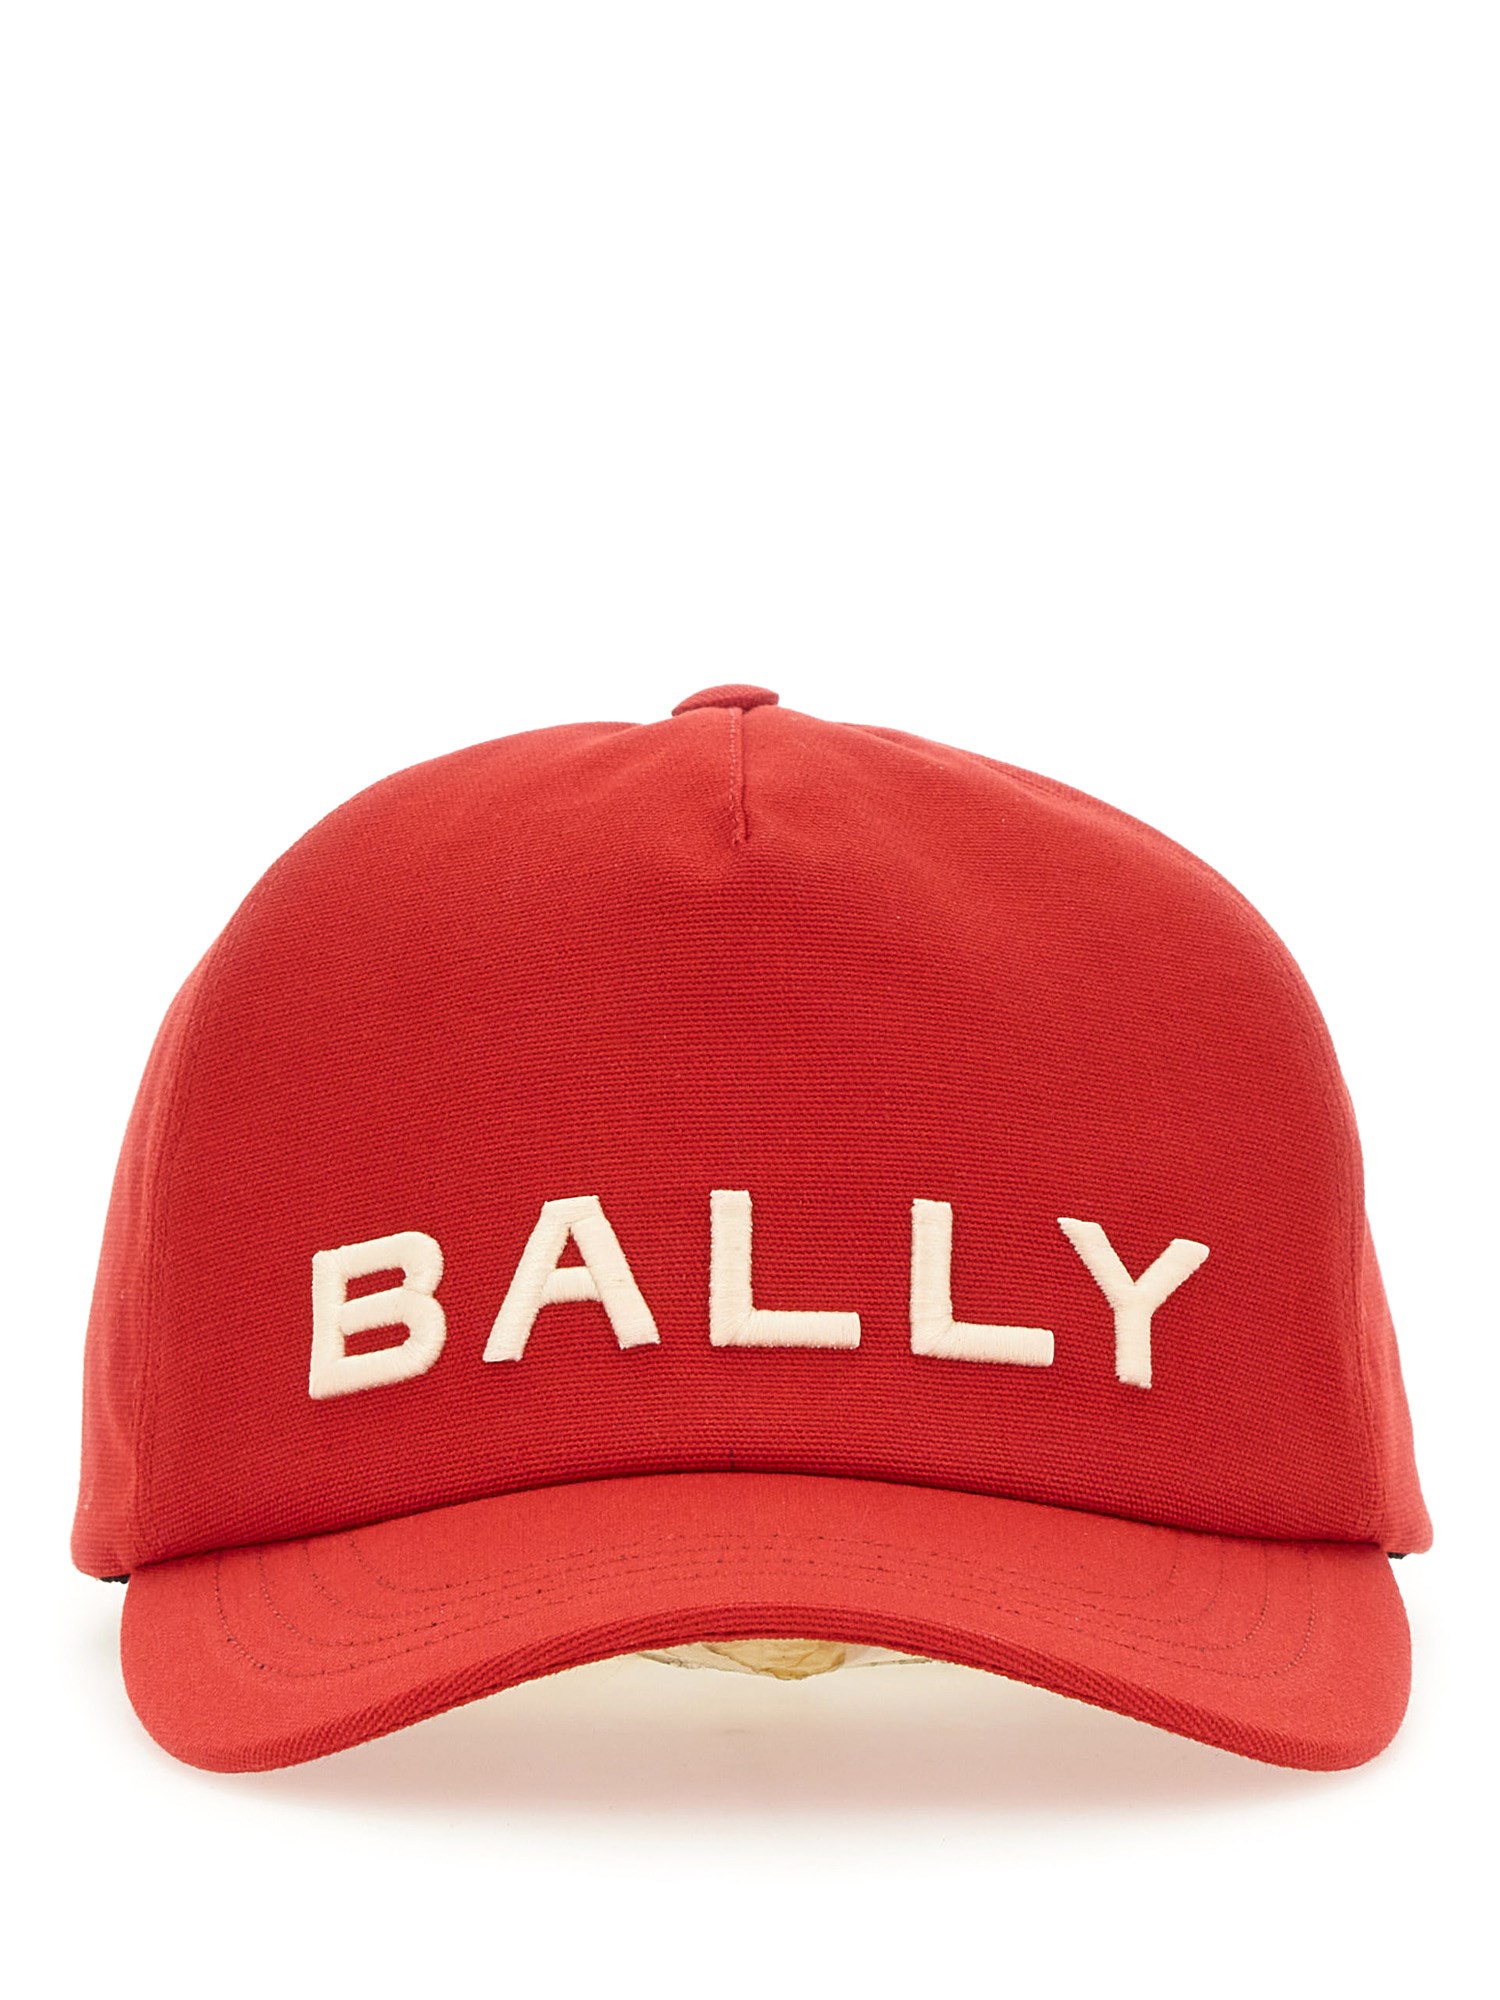 BALLY BASEBALL HAT WITH LOGO